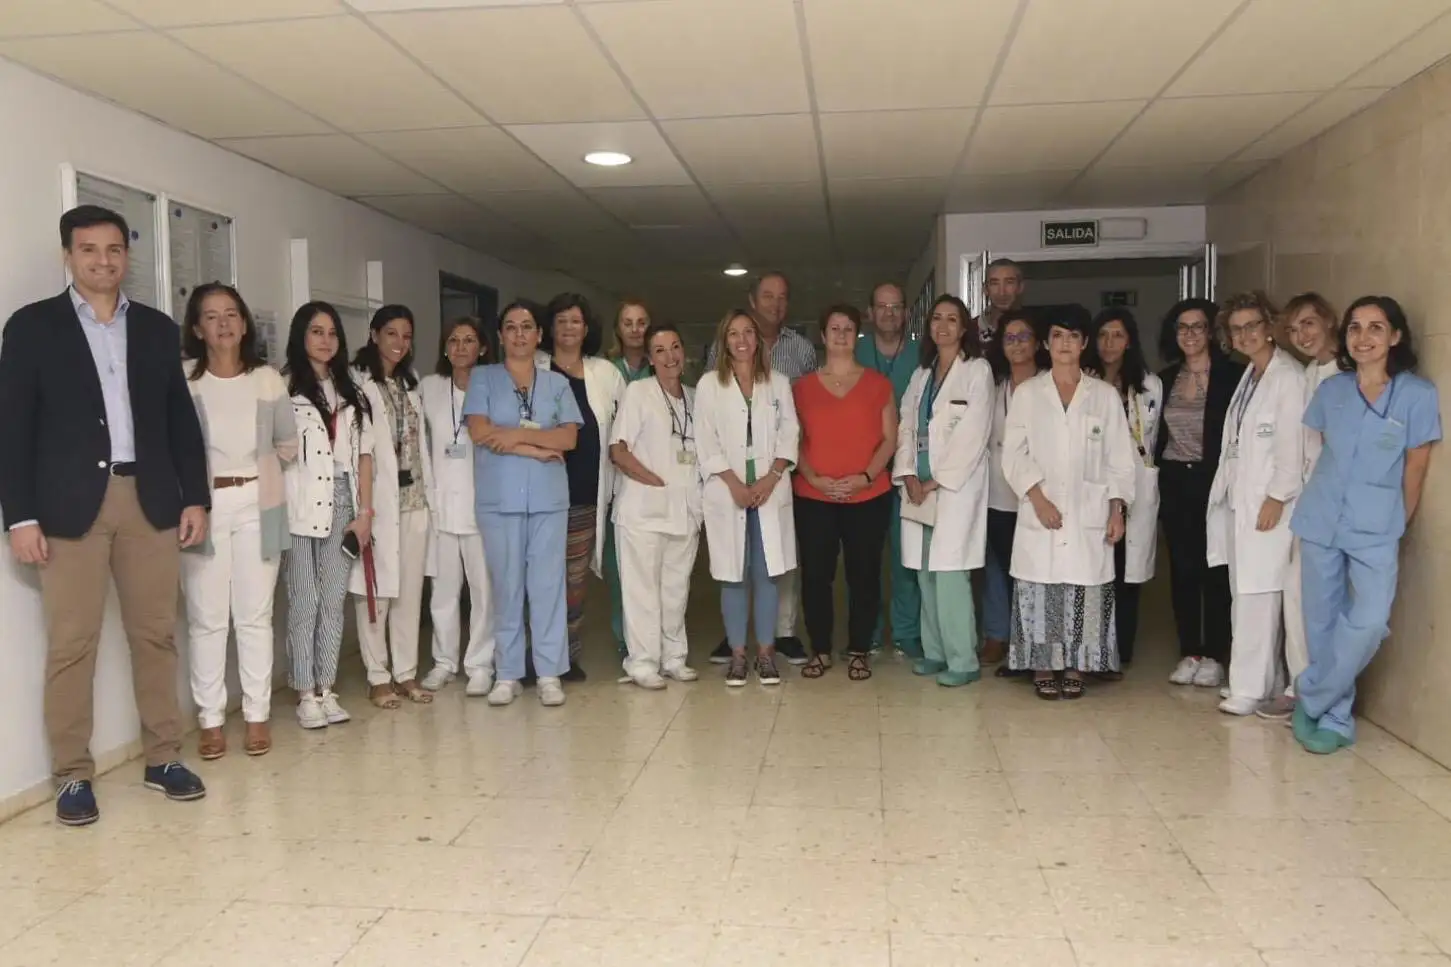 ERAS® QUALIFIED – HOSPITAL UNIVERSITARIO REINA SOFIA, SPAIN